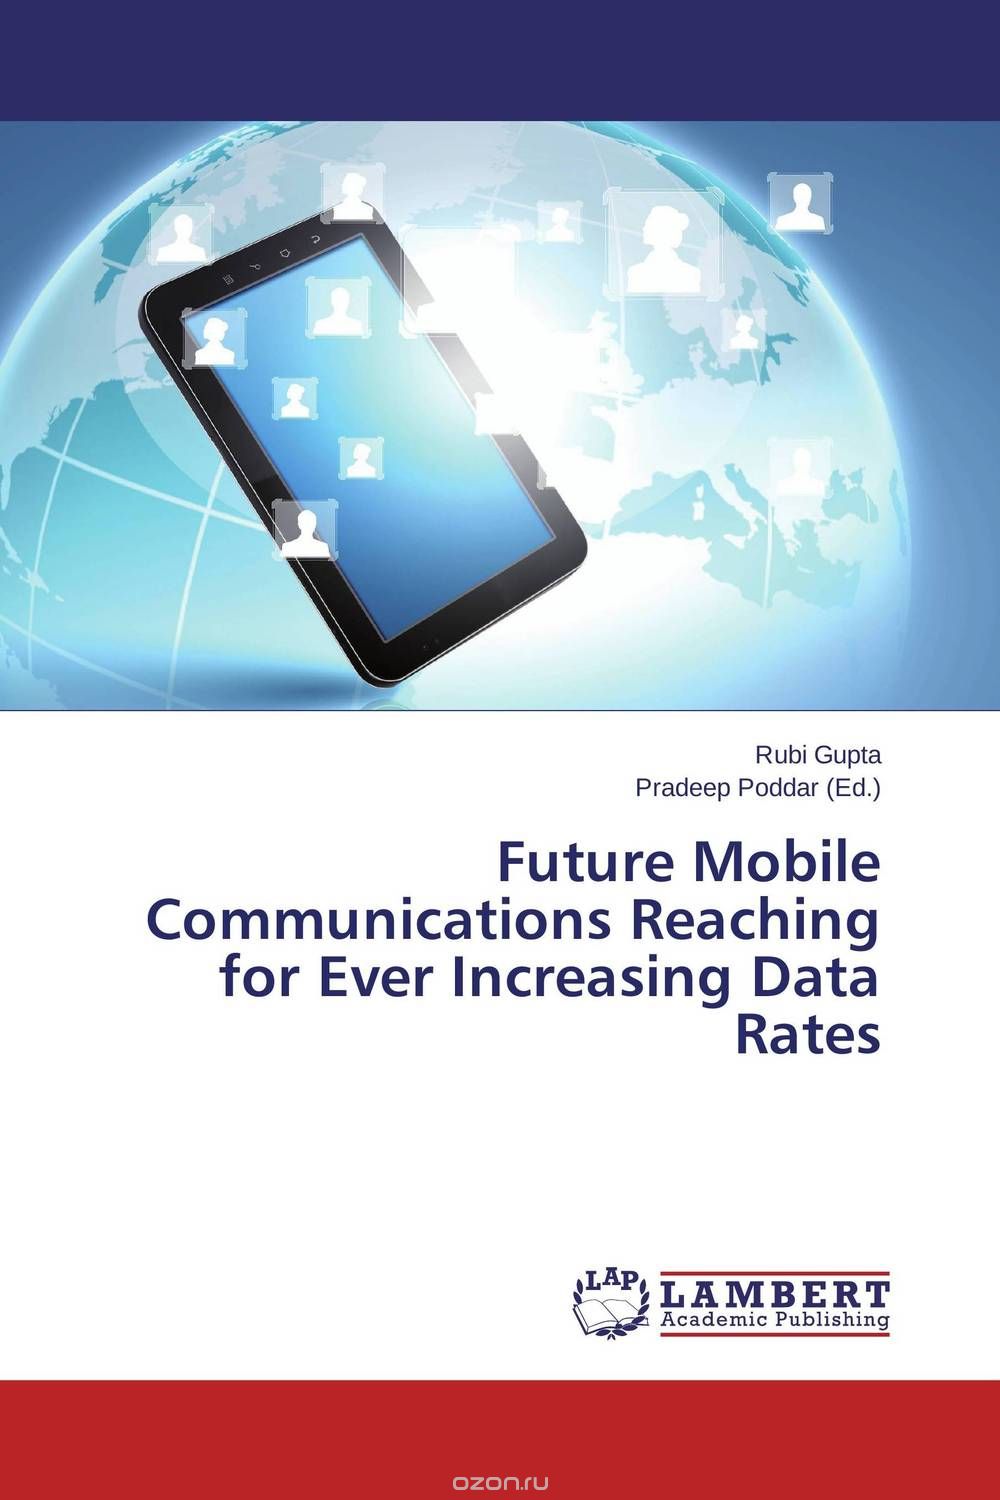 Скачать книгу "Future Mobile Communications Reaching for Ever Increasing Data Rates"